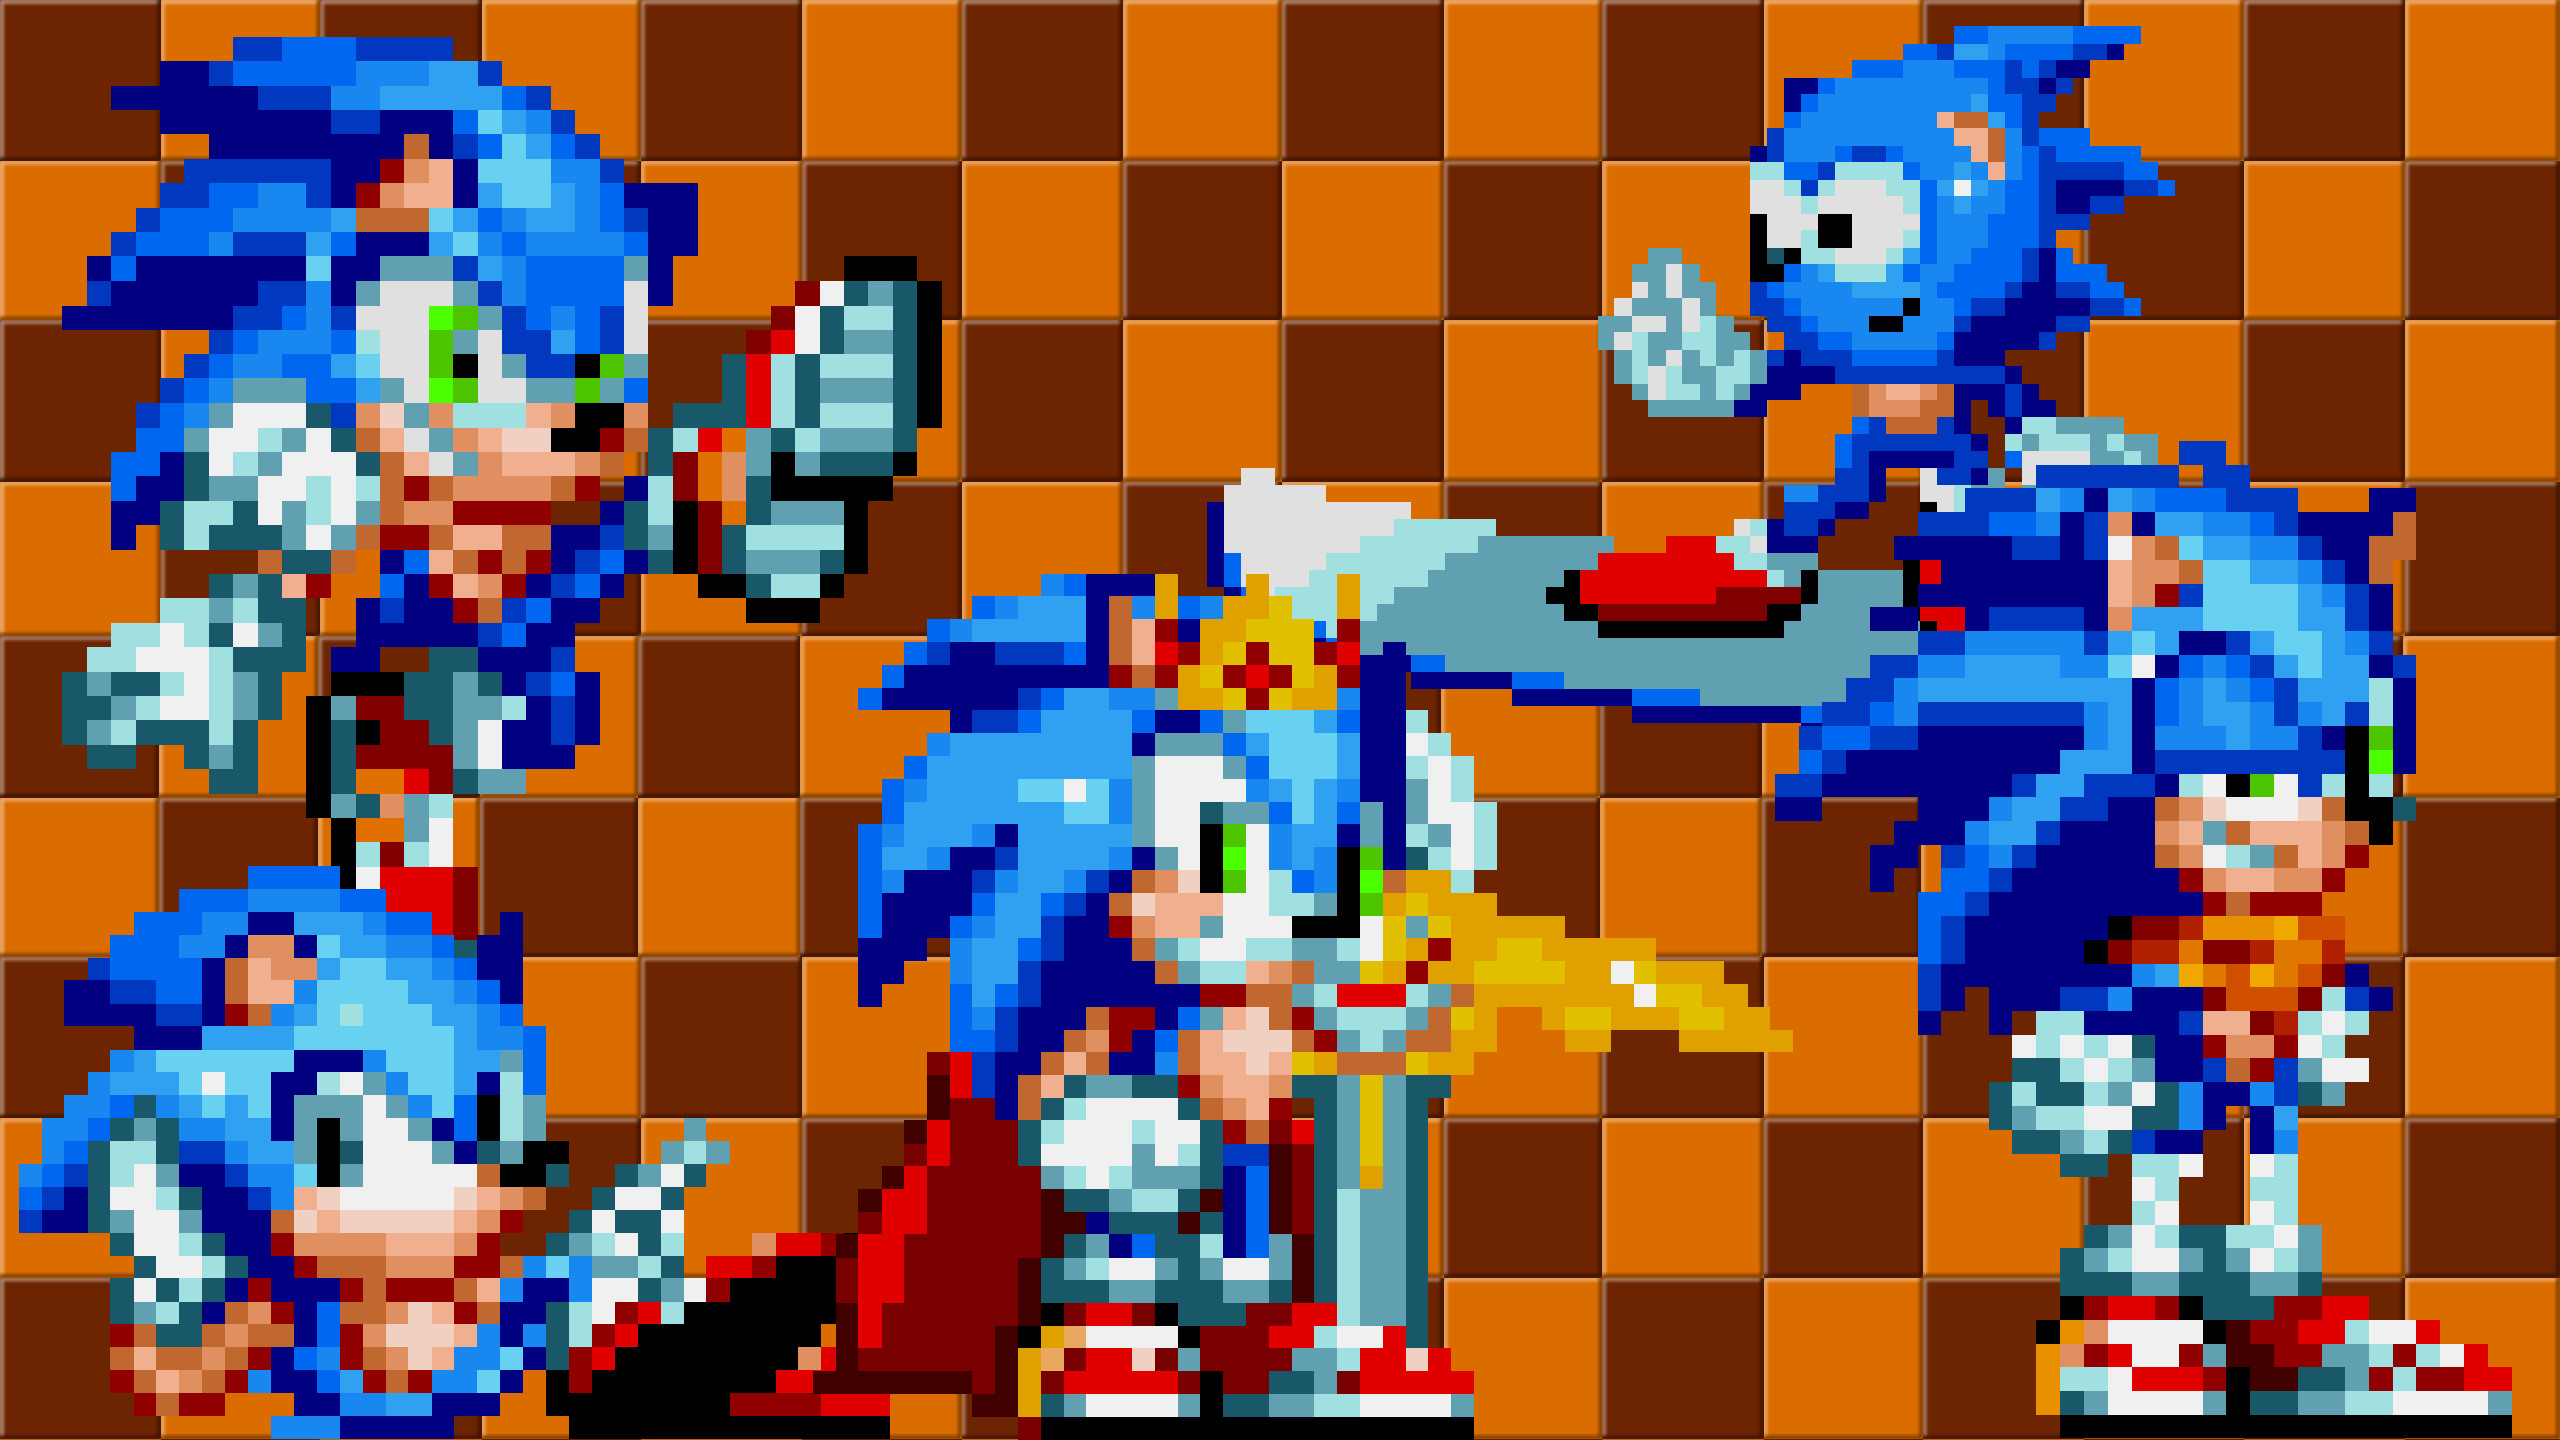 Mania Sonic [Sonic Chaos] [Mods]